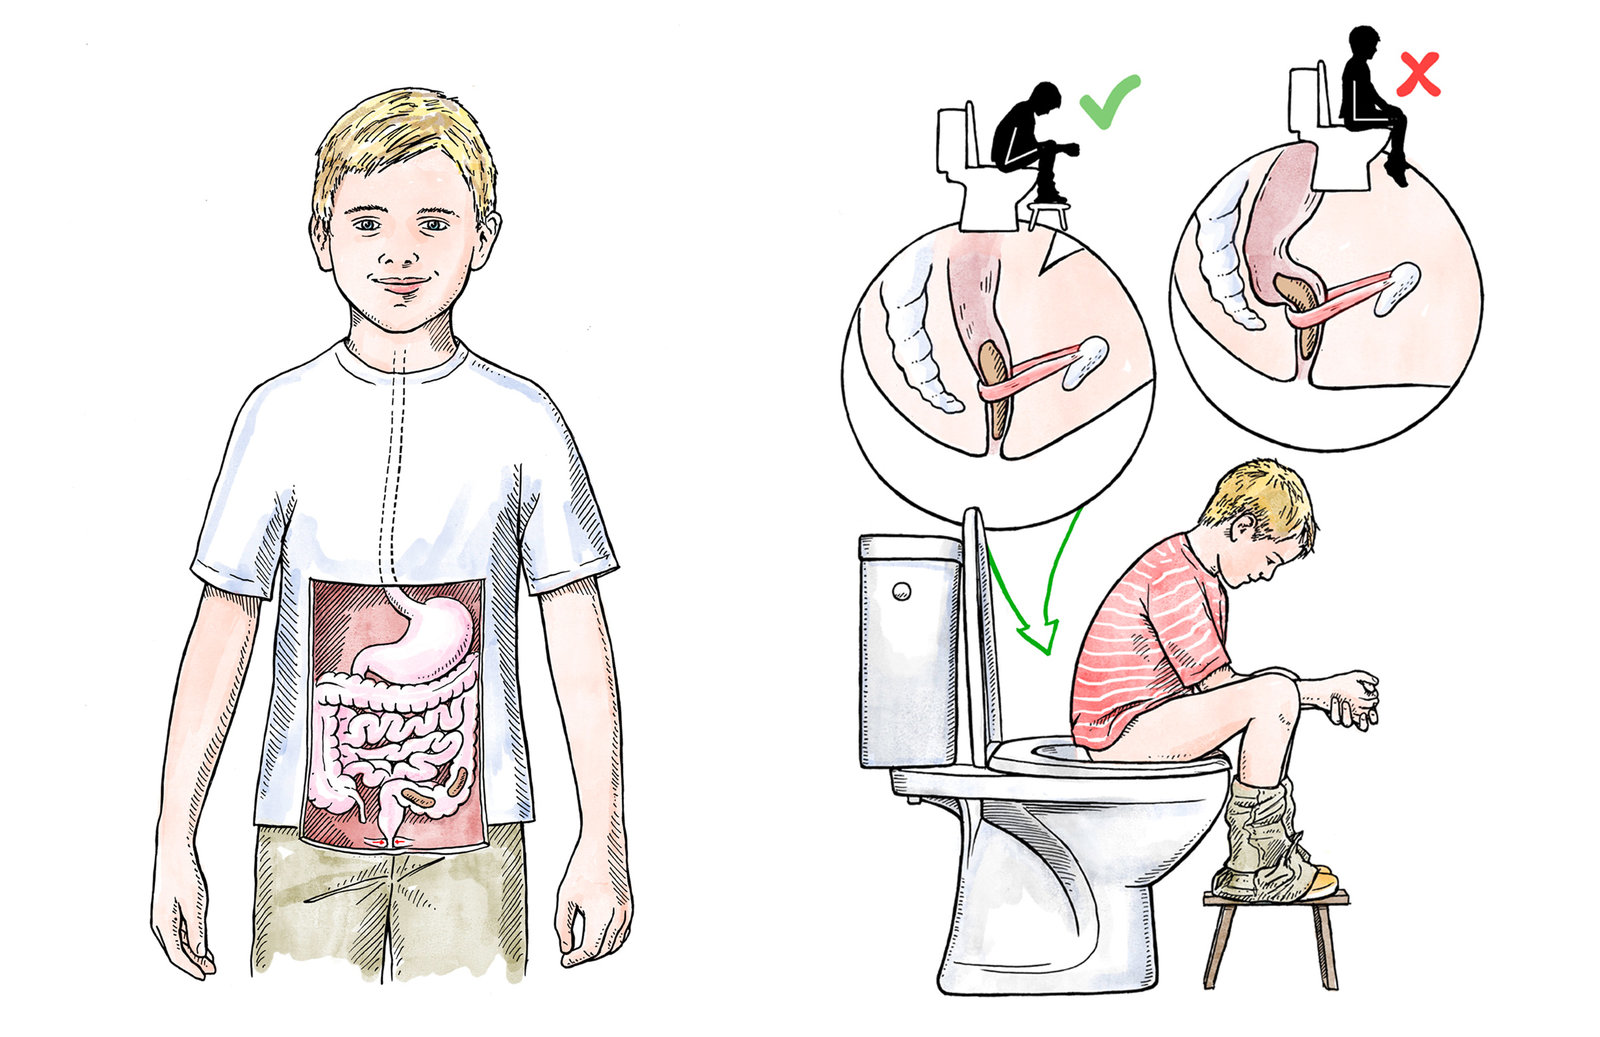 oculus-illustration-urologie-kinder-zeichnung-magendarmtrakt-stuhlgang